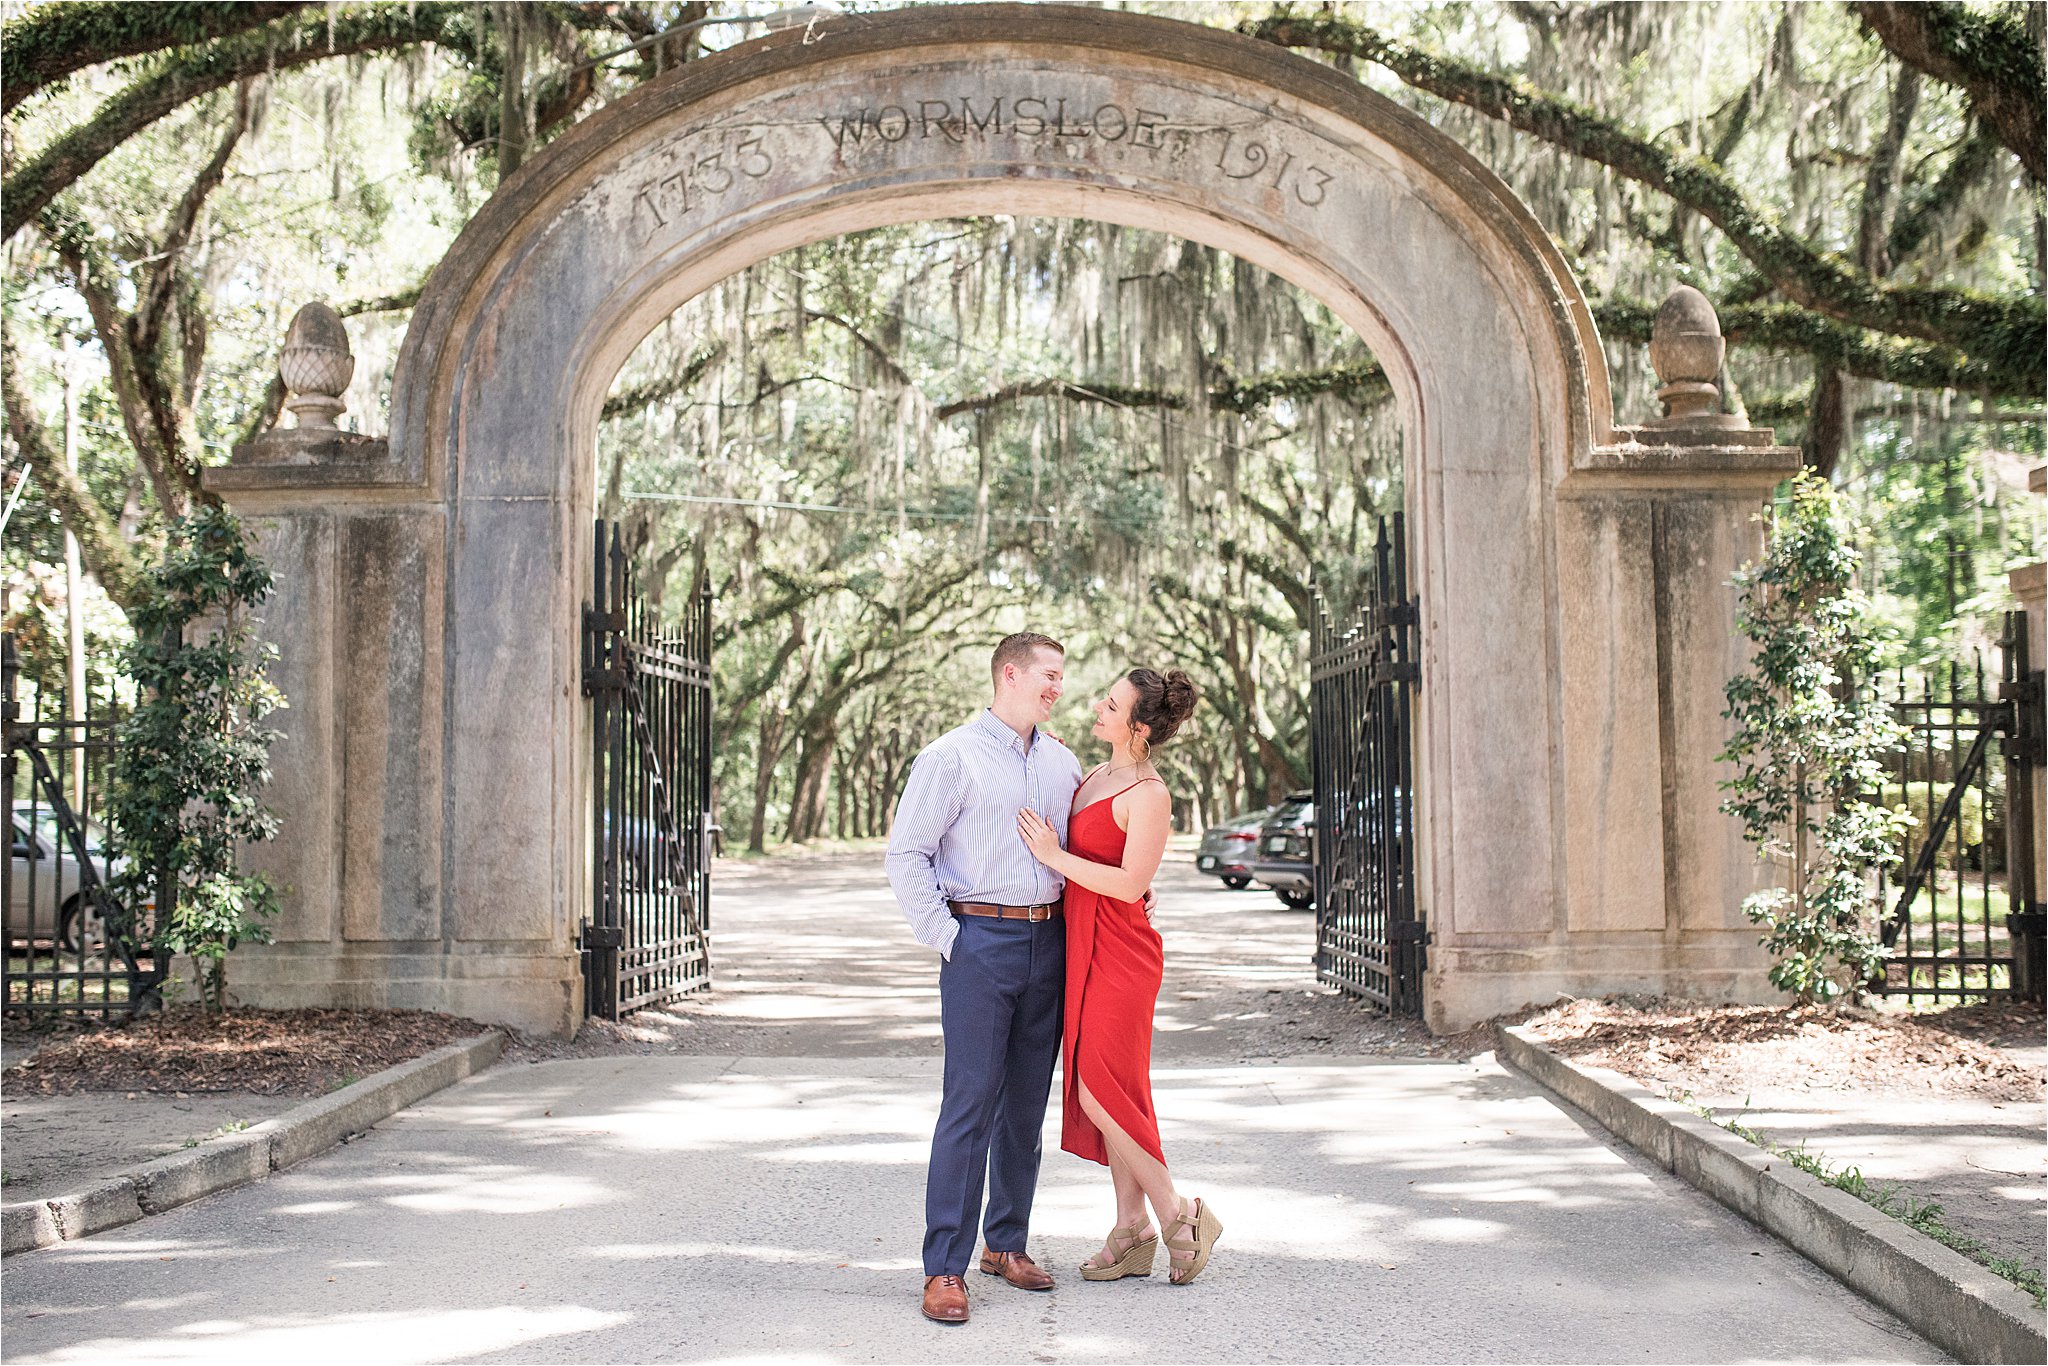 Couple in Wormsloe Plantation in Savannah, GA by destination photographer Karen Shoufler